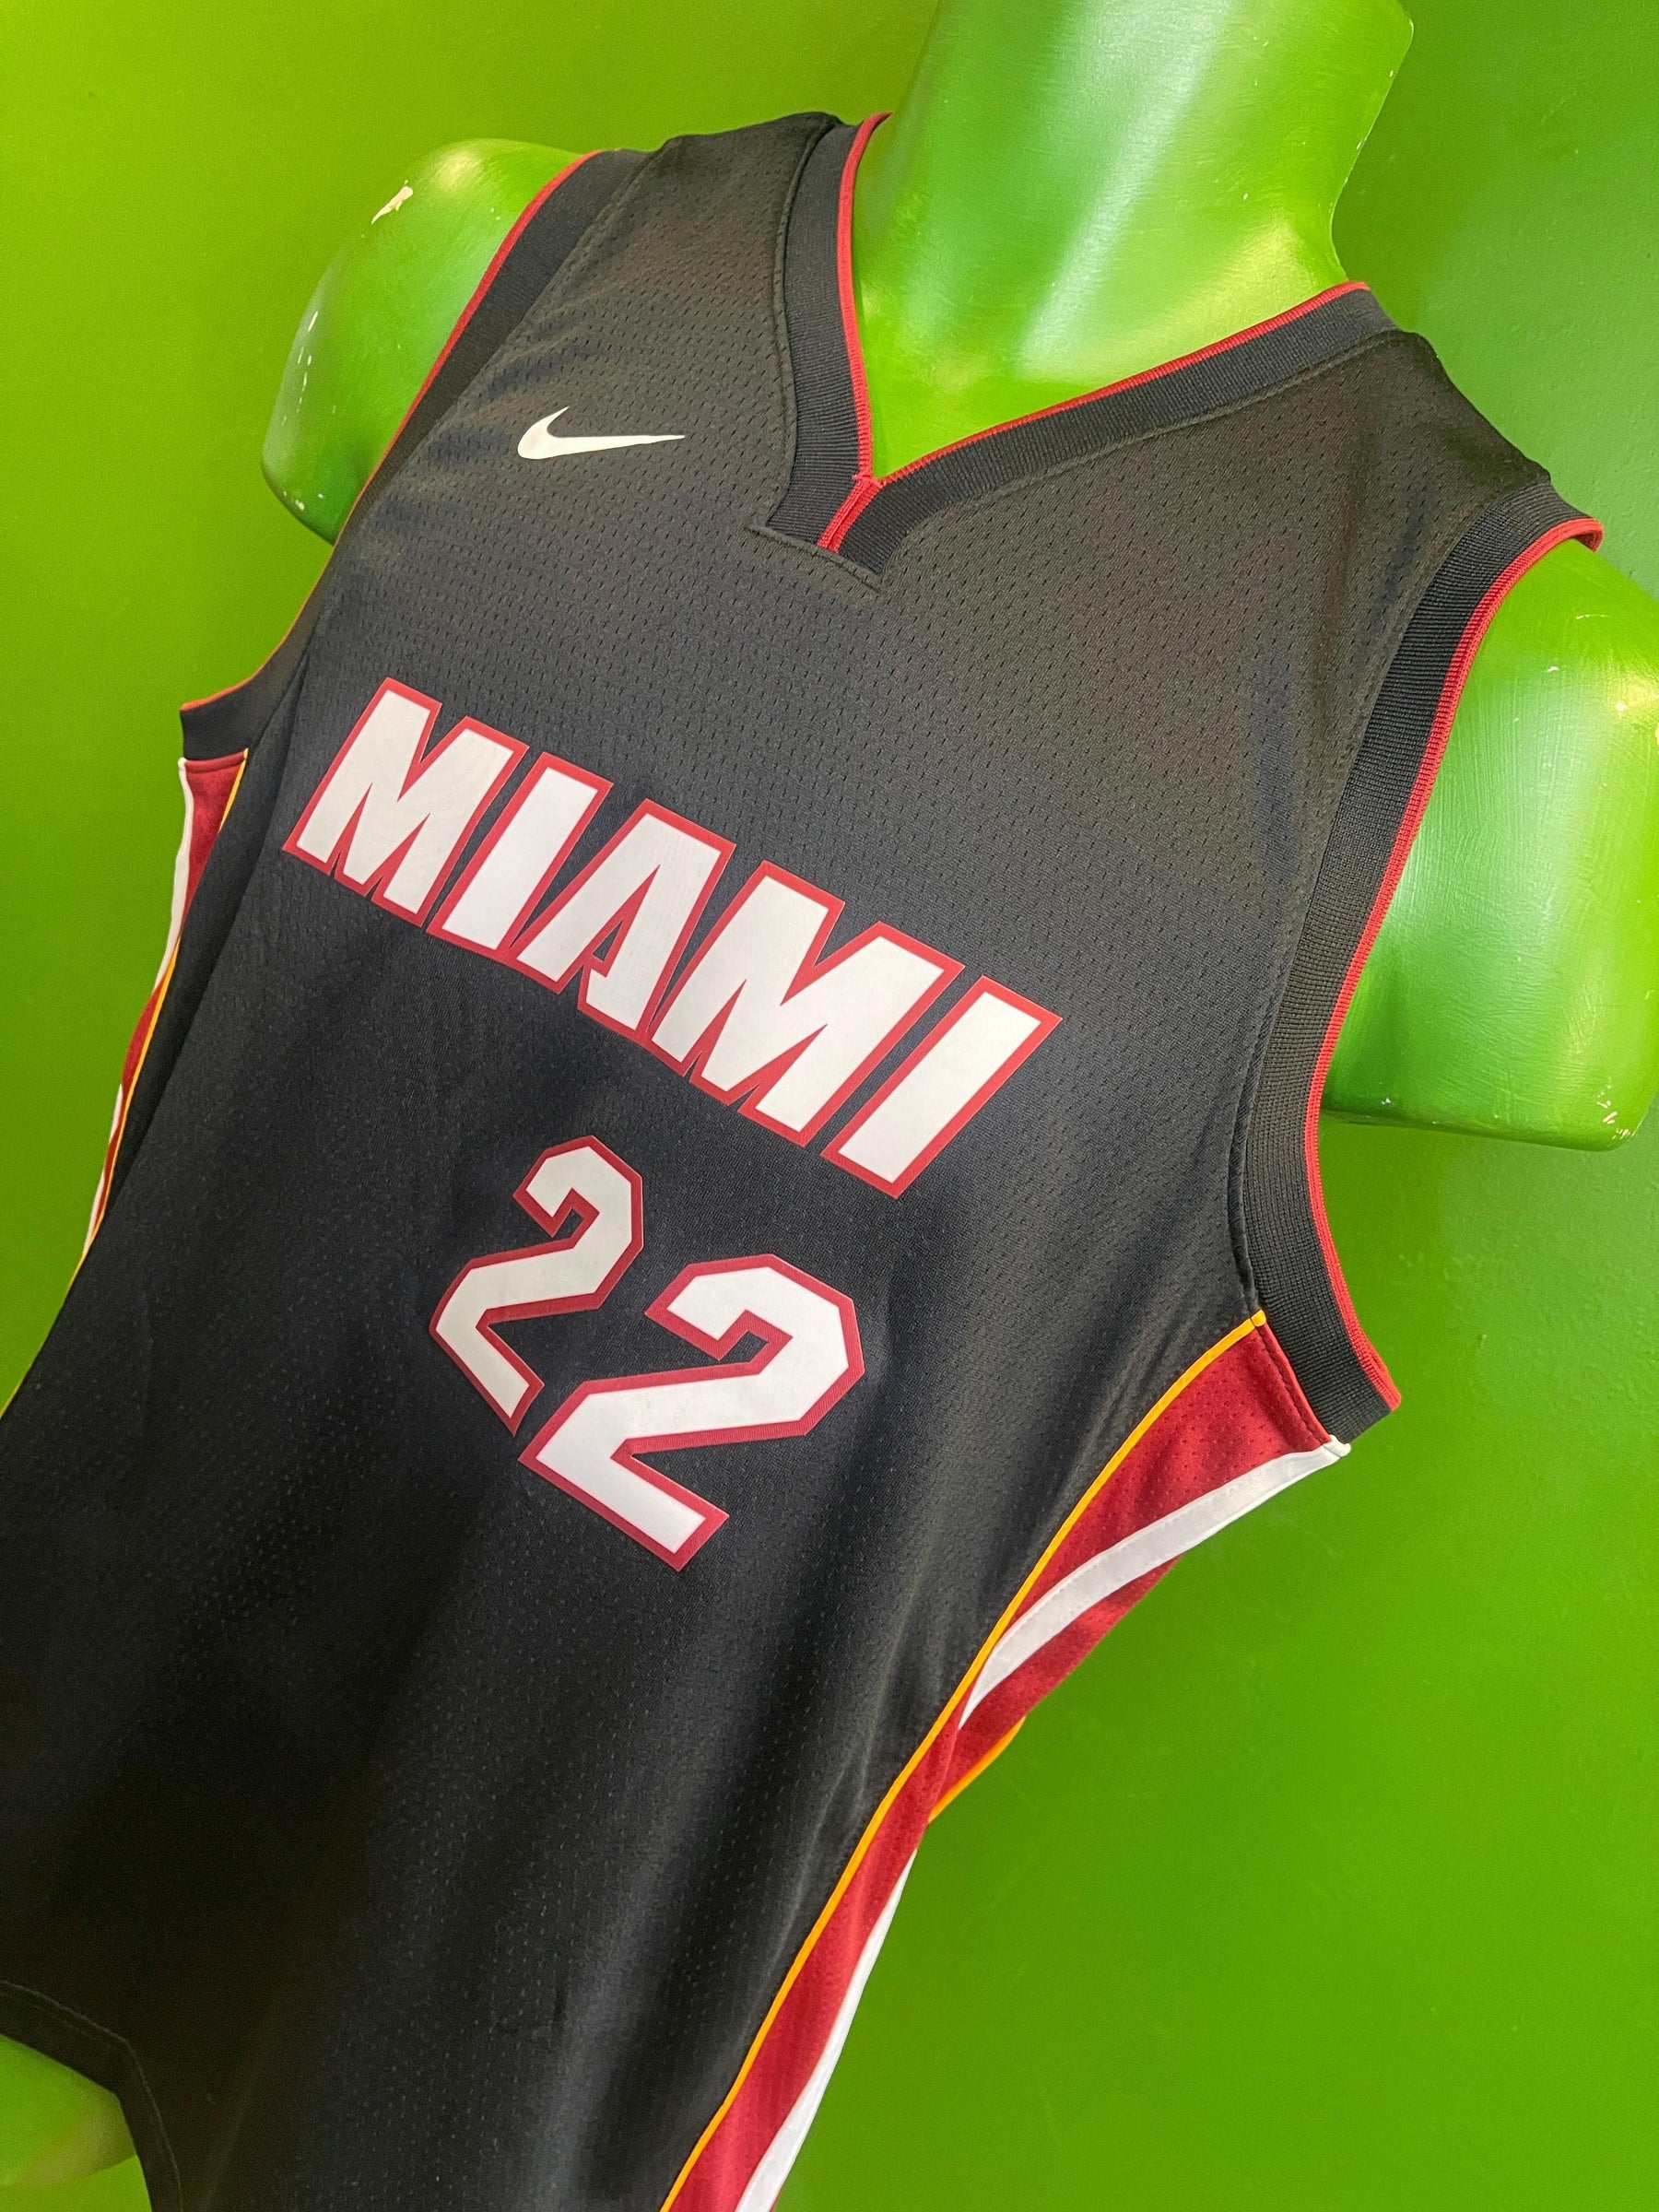 NBA Miami Heat Jimmy Butler Swingman Icon Jersey Youth Large 14-16 NWT